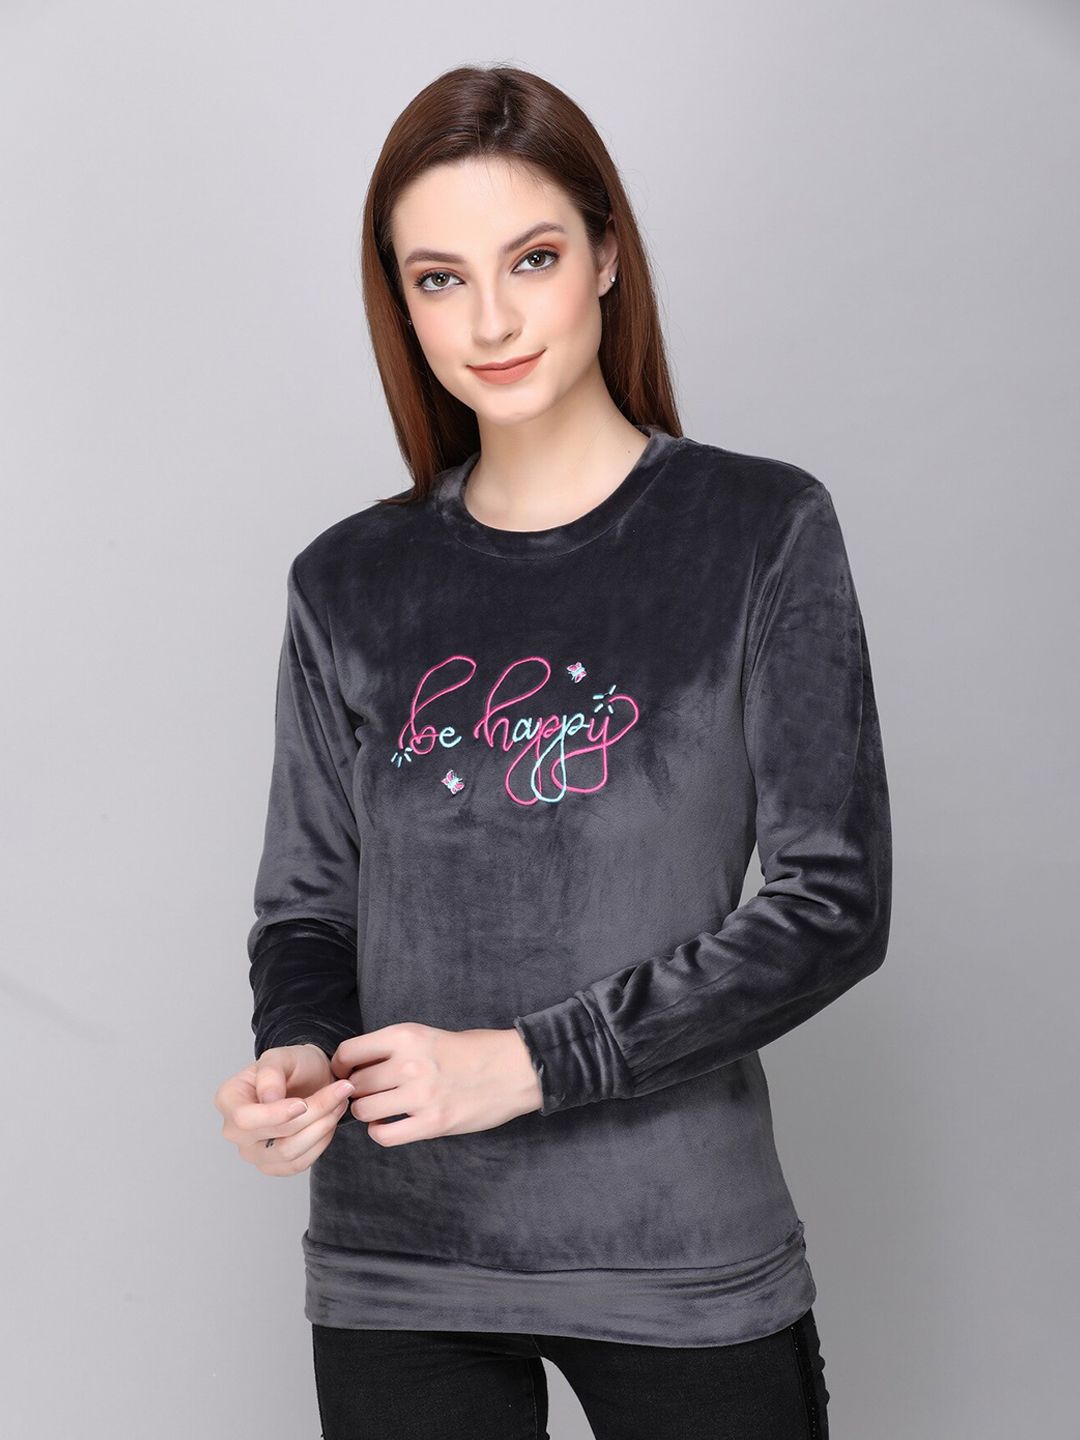 CUSHYBEE Women Charcoal Embroidered Sweatshirt Price in India